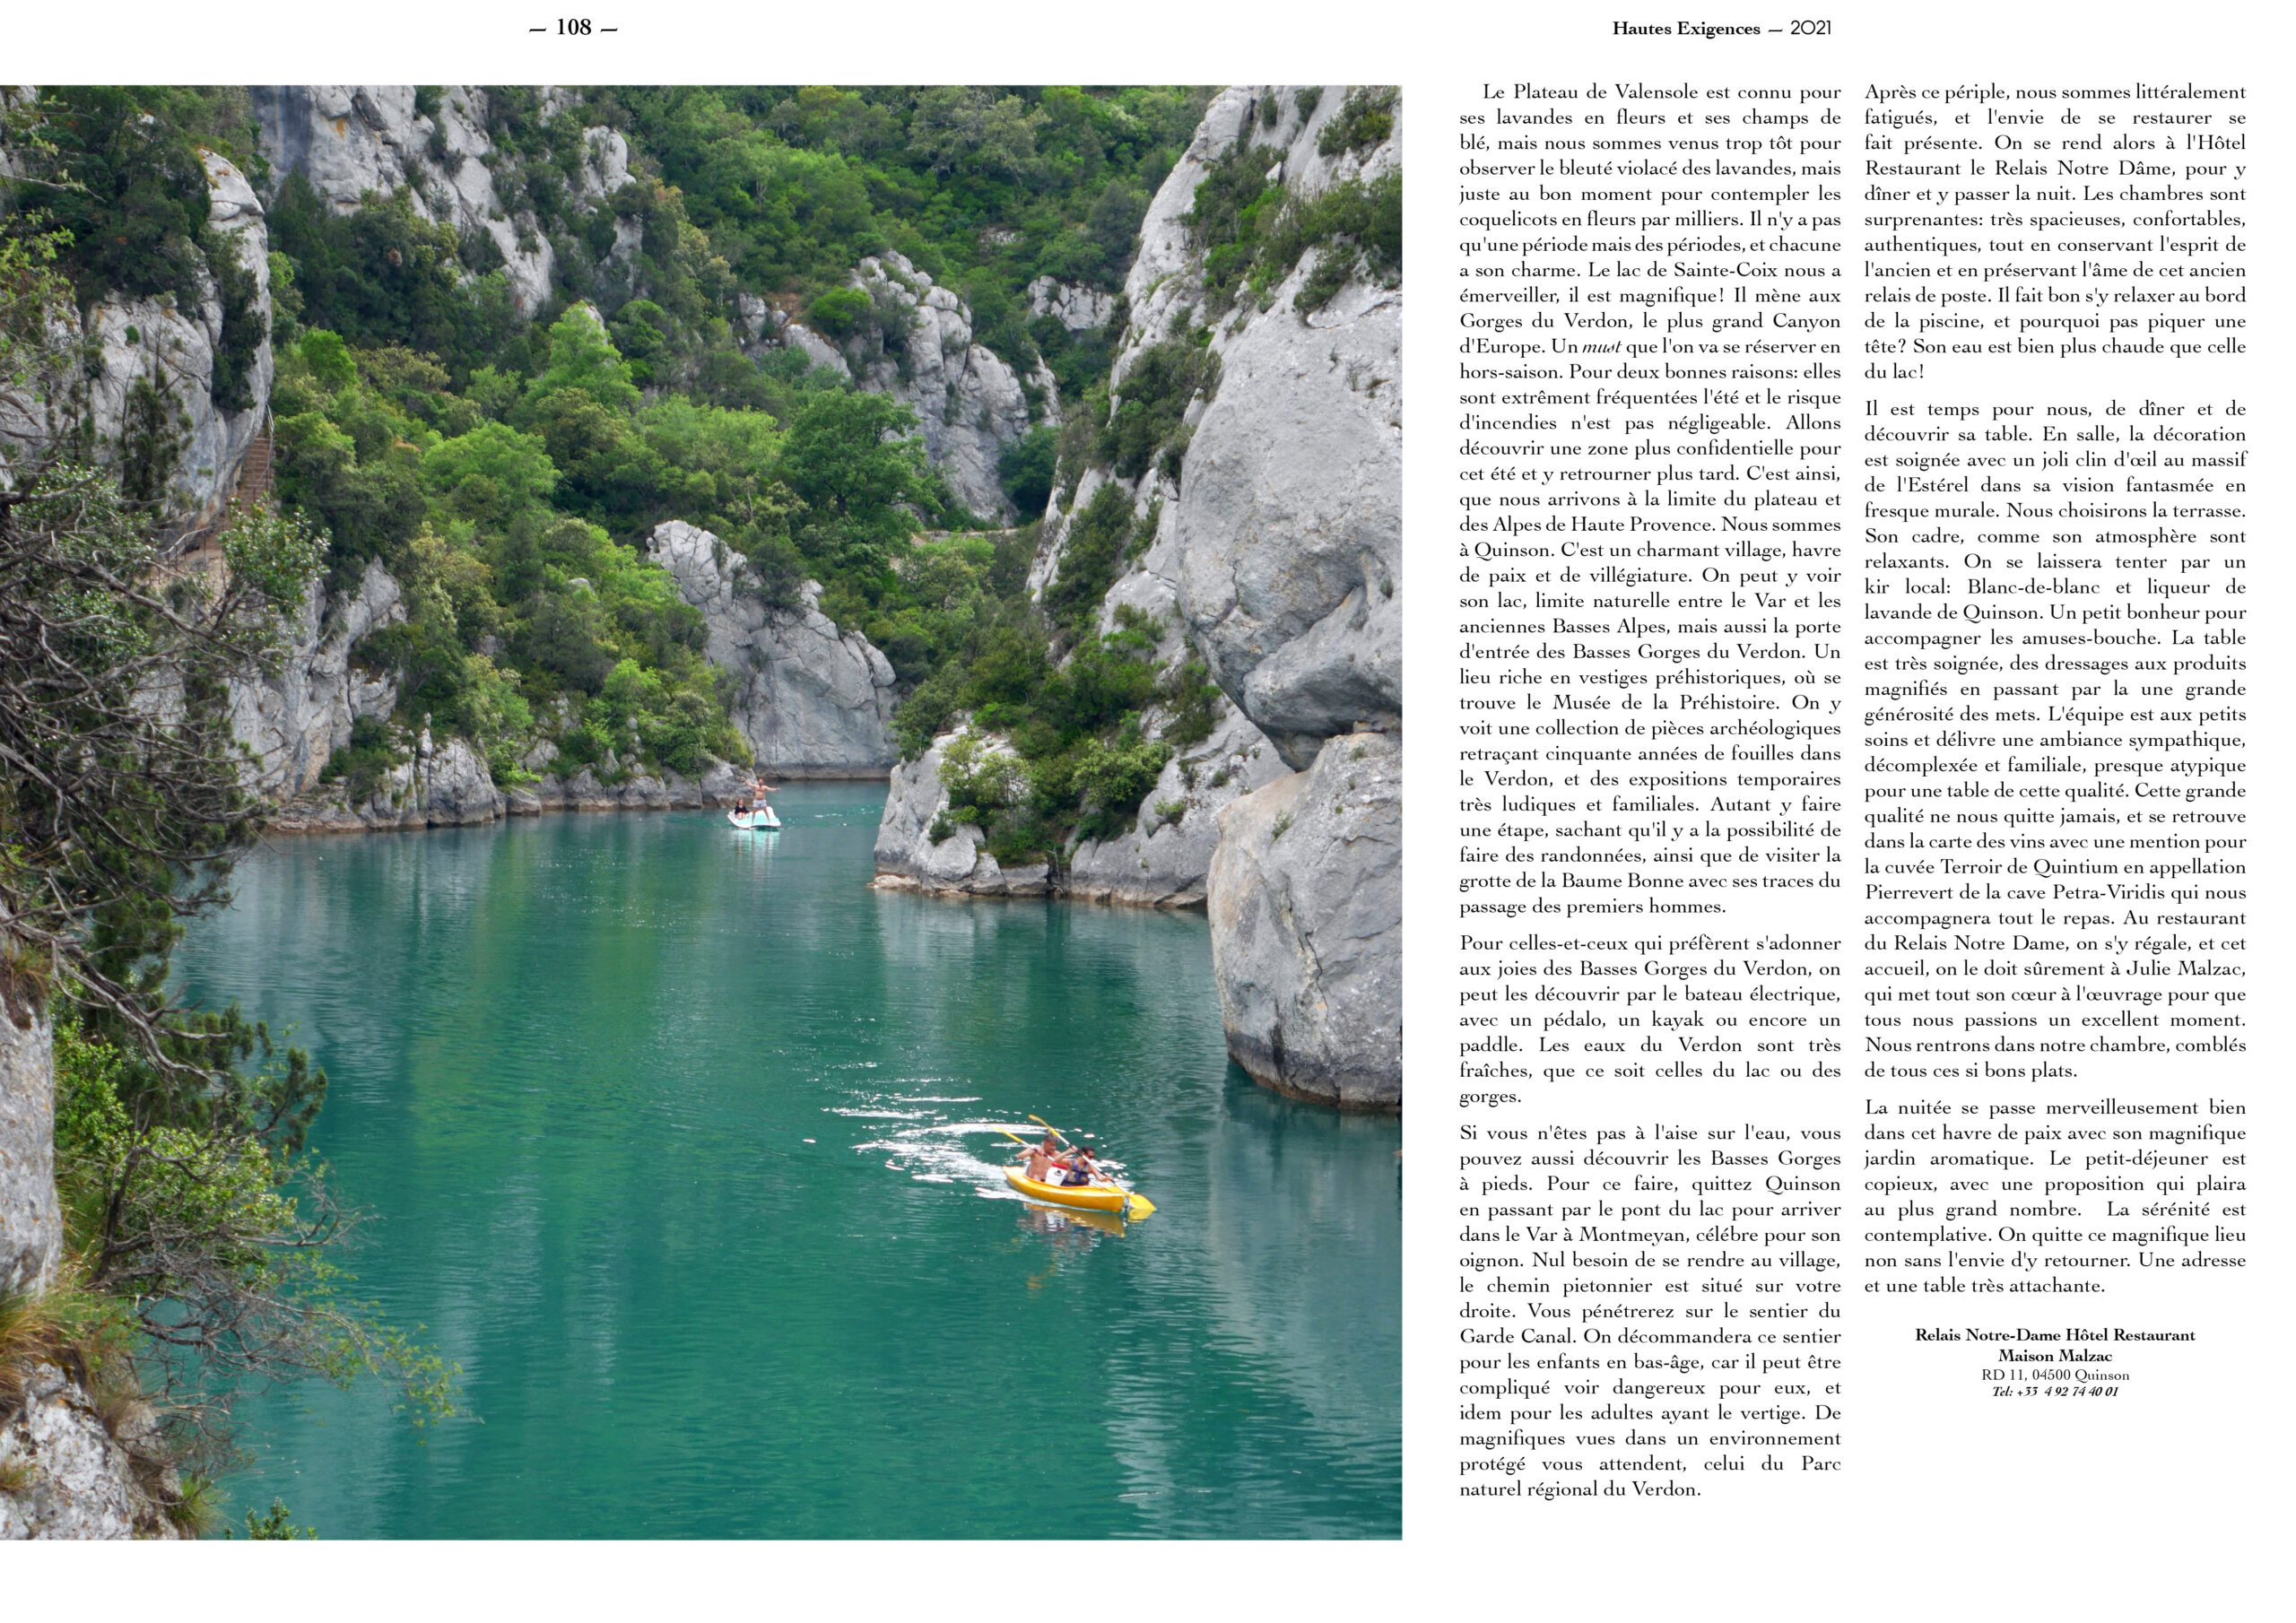 Hautes Exigences Magazine Hors Serie 2021 page 106-107